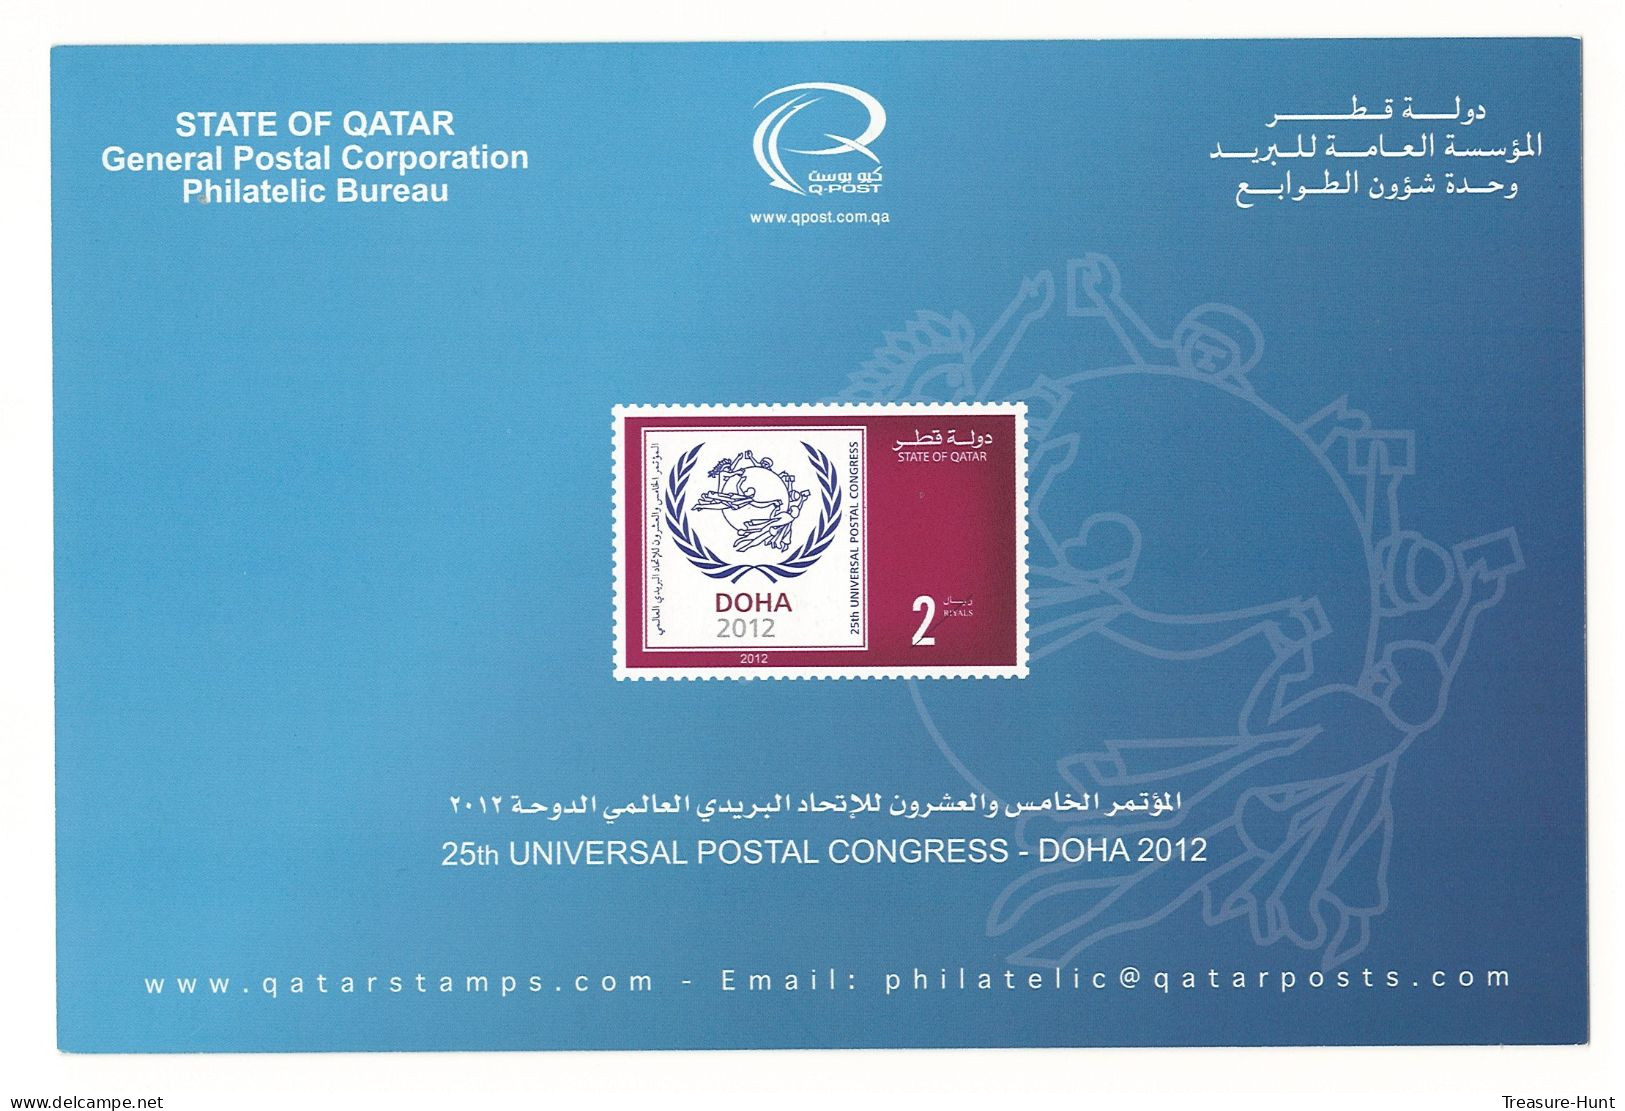 QATAR NEW STAMPS ISSUE BULLETIN / BROCHURE / POSTAL NOTICE - 2012 UPU CONGRESS IN DOHA UNIVERSAL POSTAL UNION LOGO - Qatar